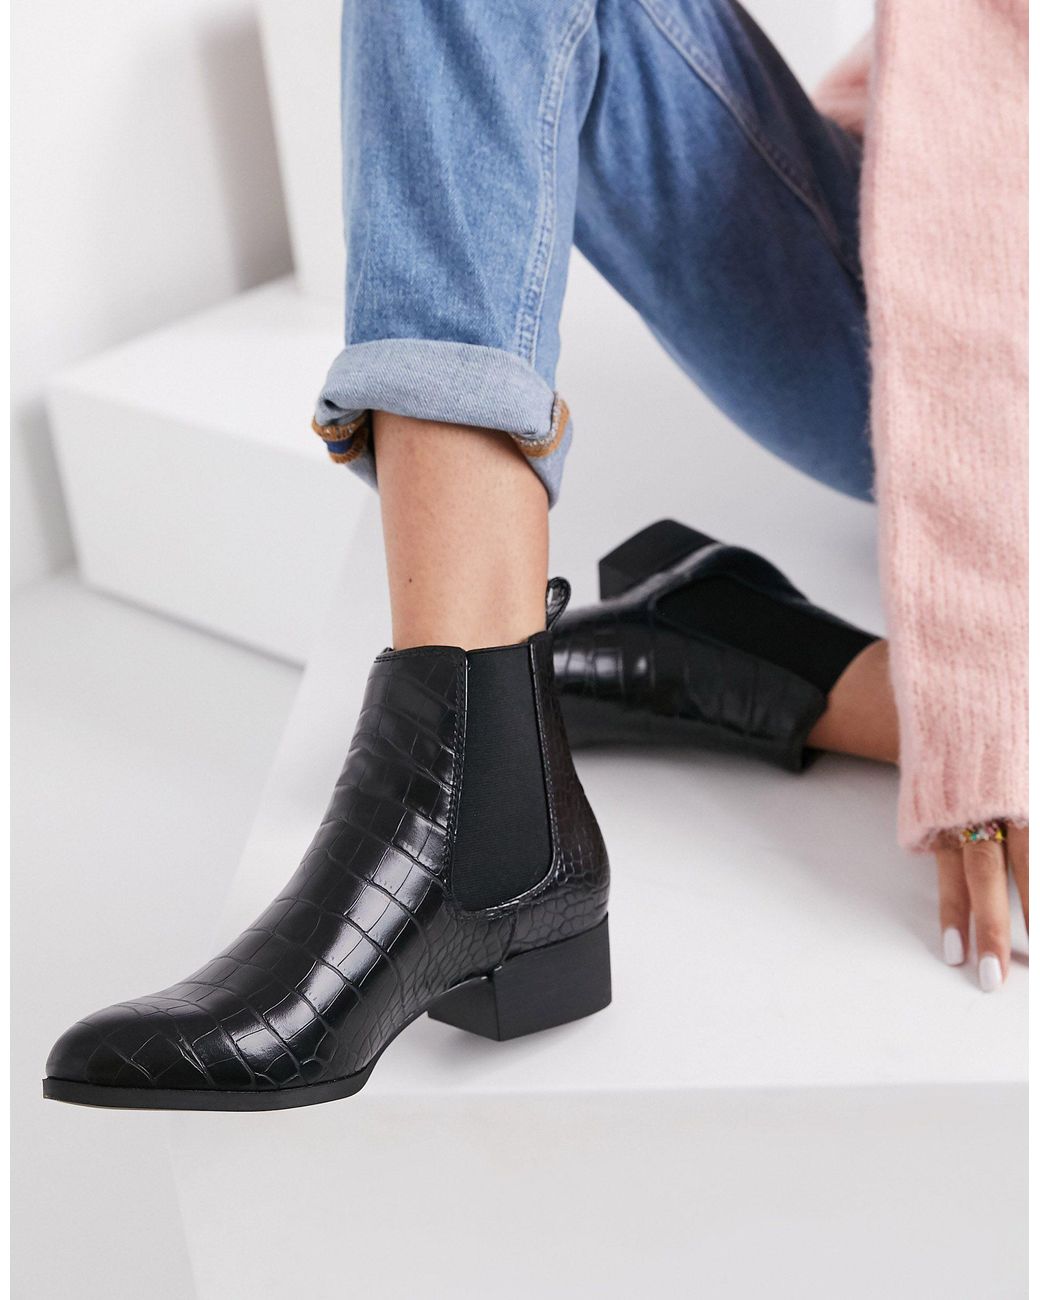 Monki Ofelia Vegan Leather Chelsea Boots in Black - Lyst